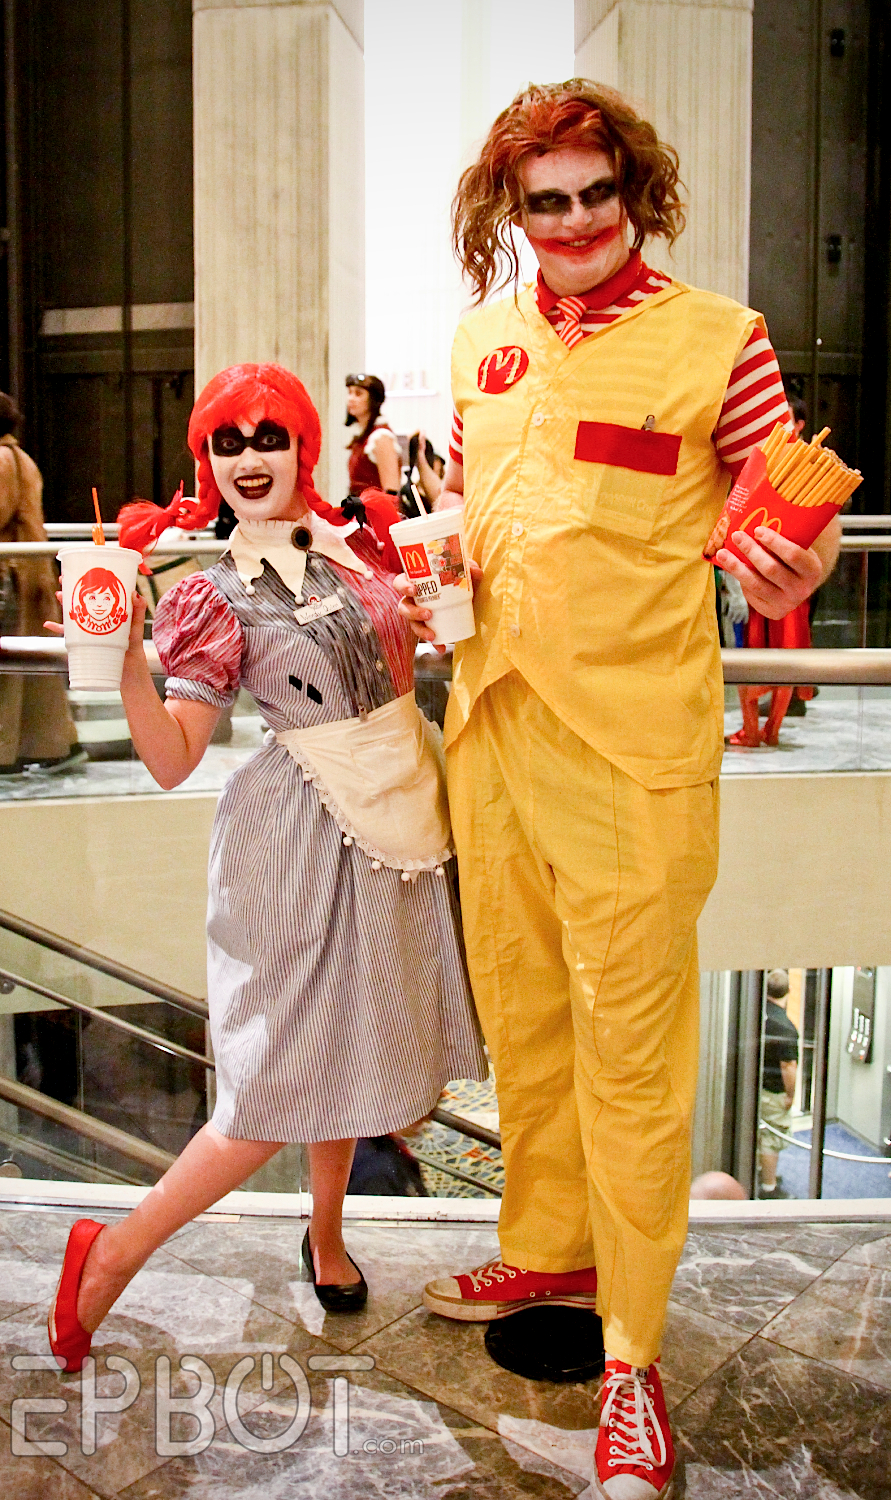 Harley Wendy with a Joker Ronald McDonald. 